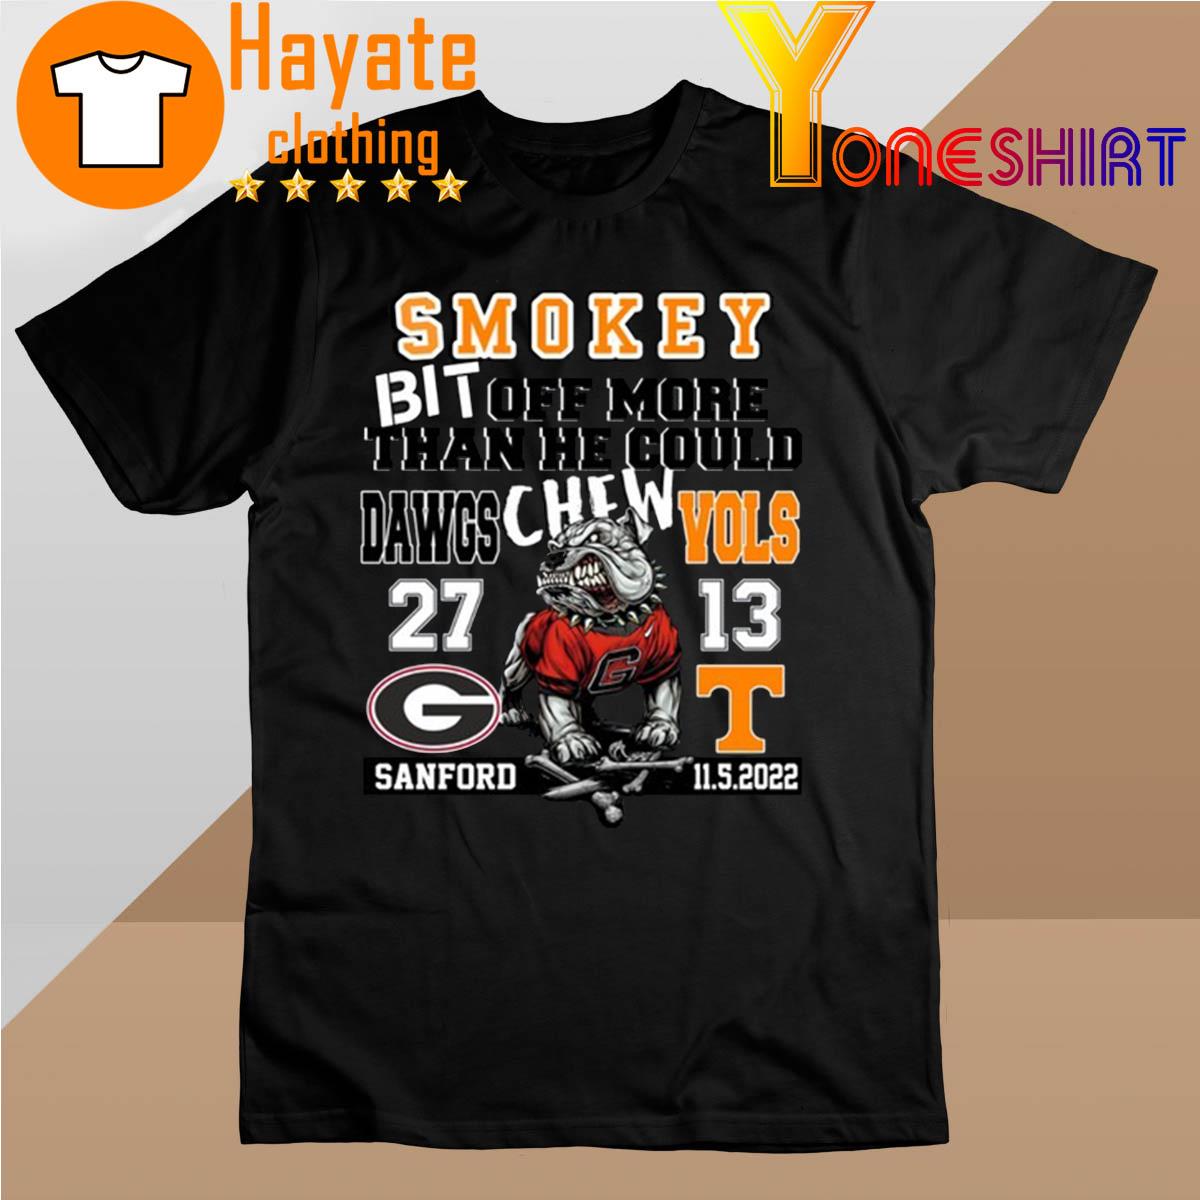 Smokey Bit Off More than he Could Dawgs Chew Vols 27-13 shirt